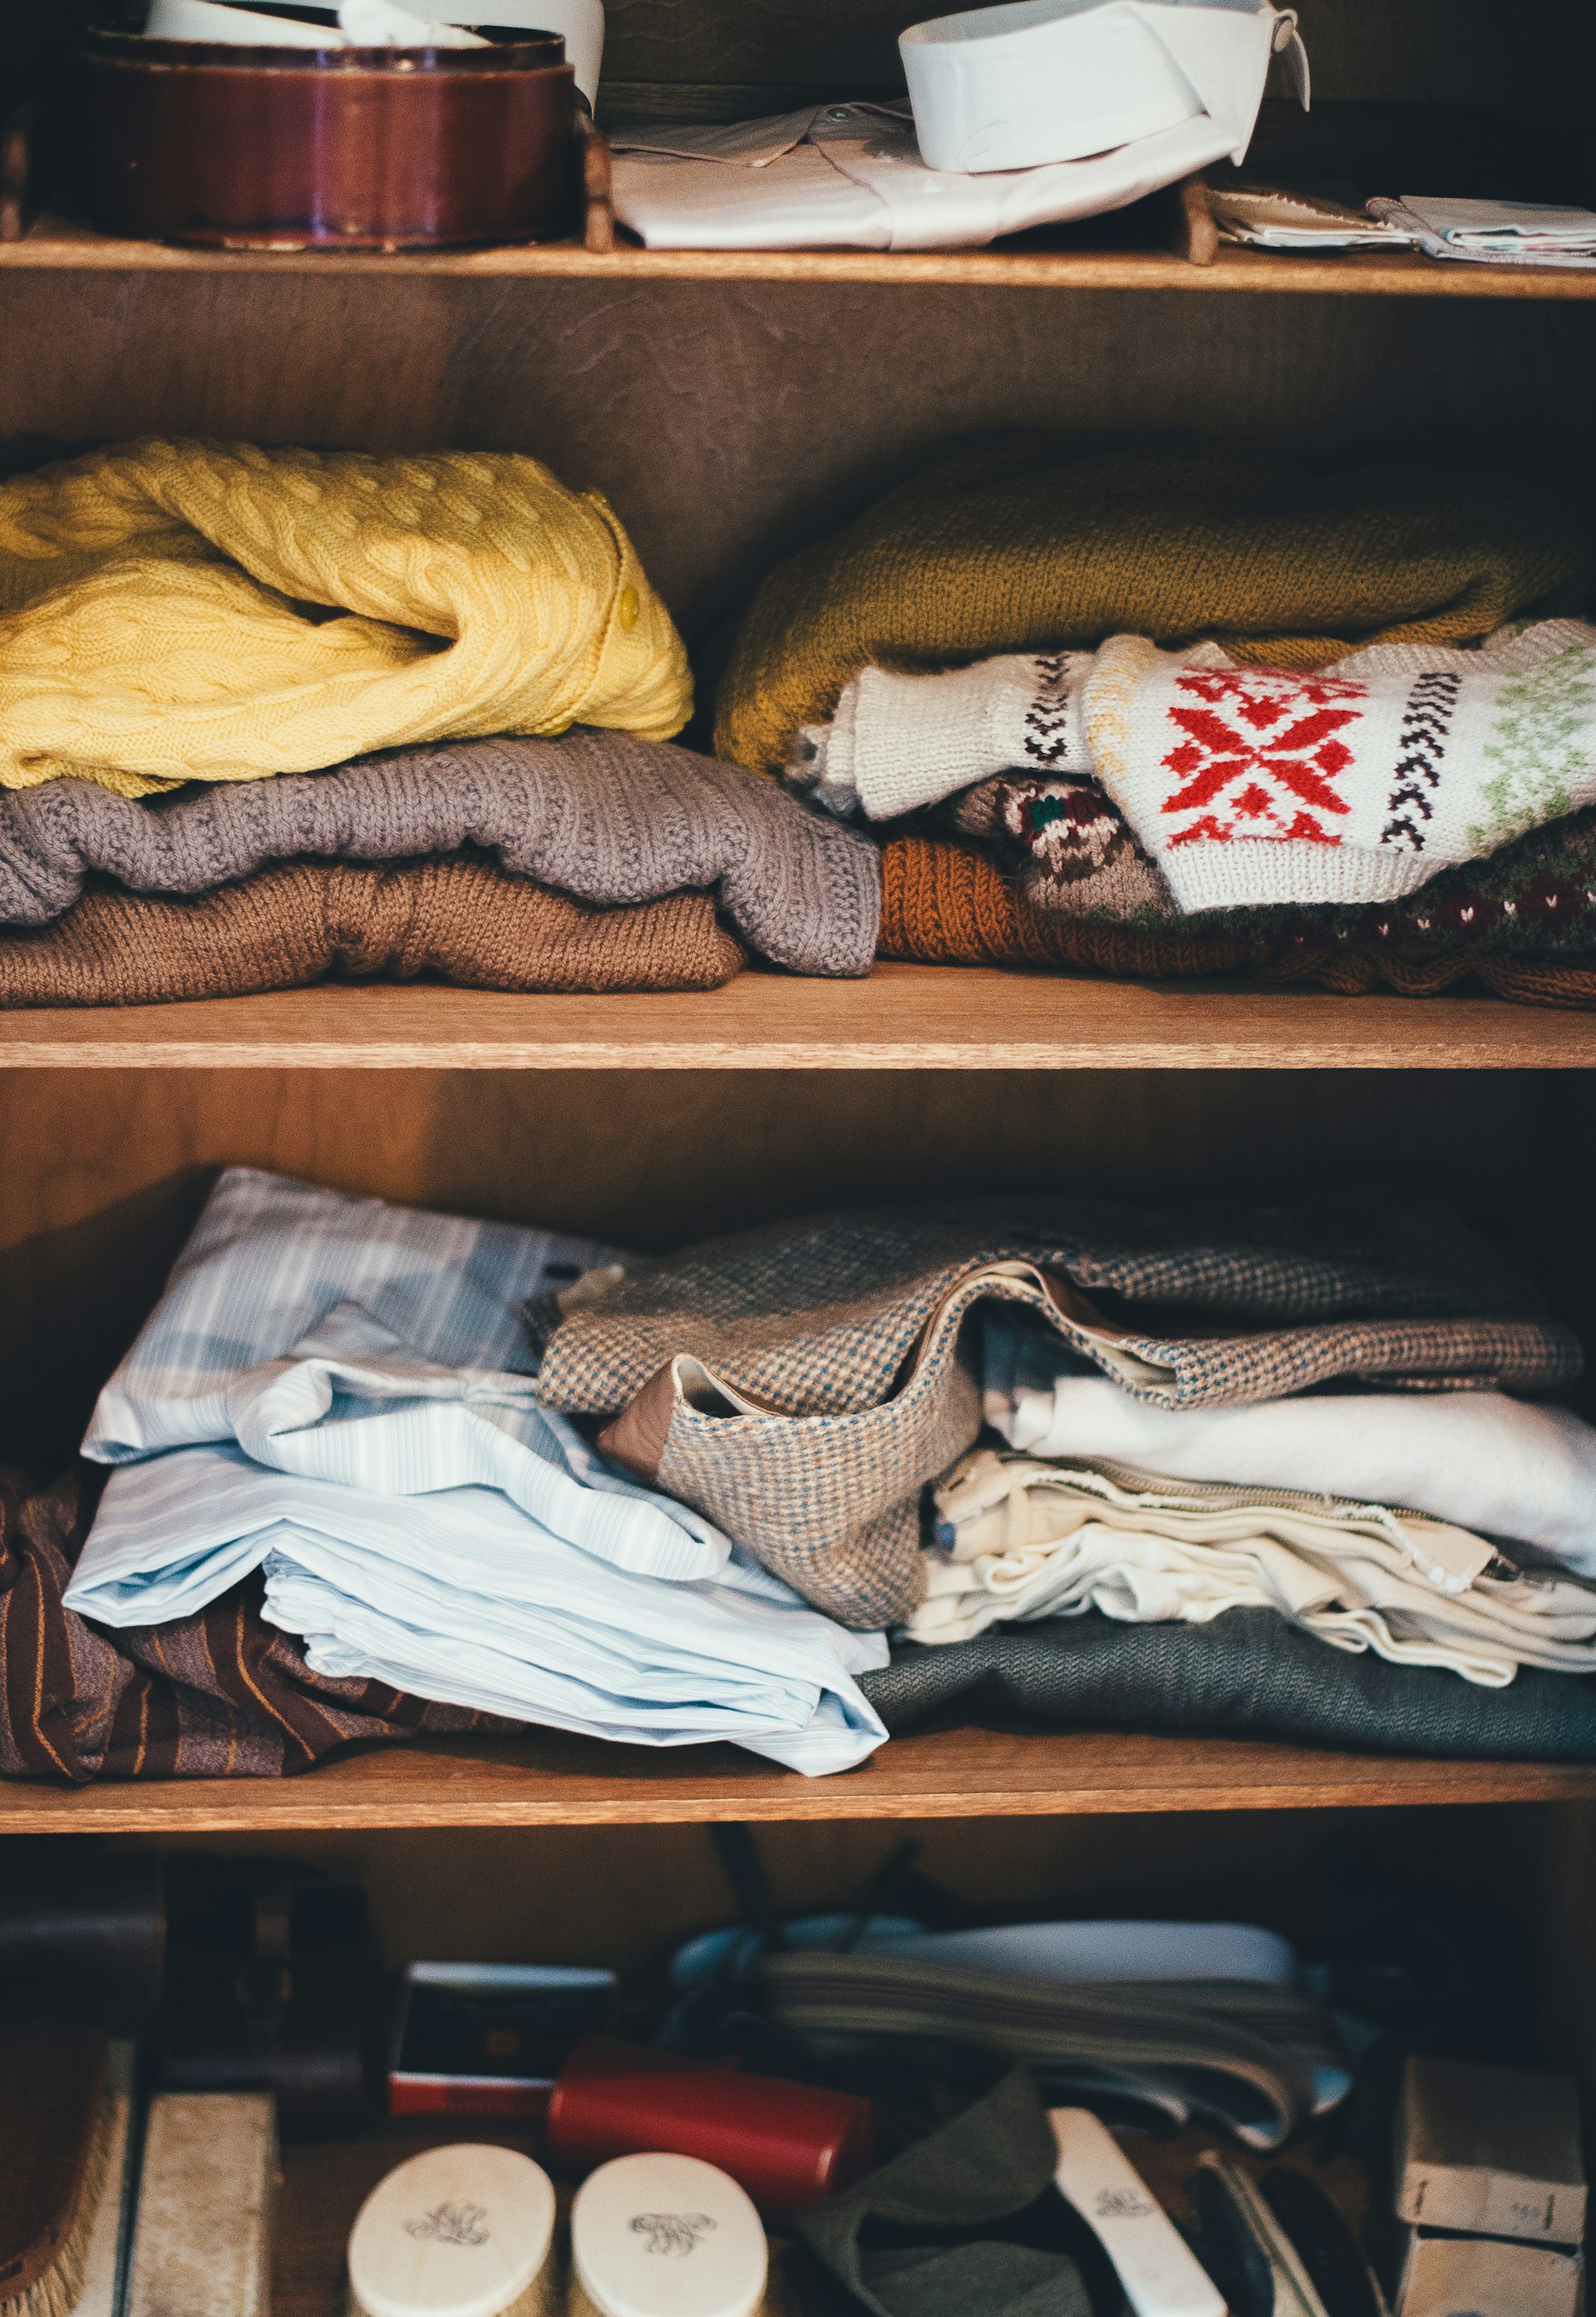 Clothing on a shelf in a cupboard | Source: Unsplash